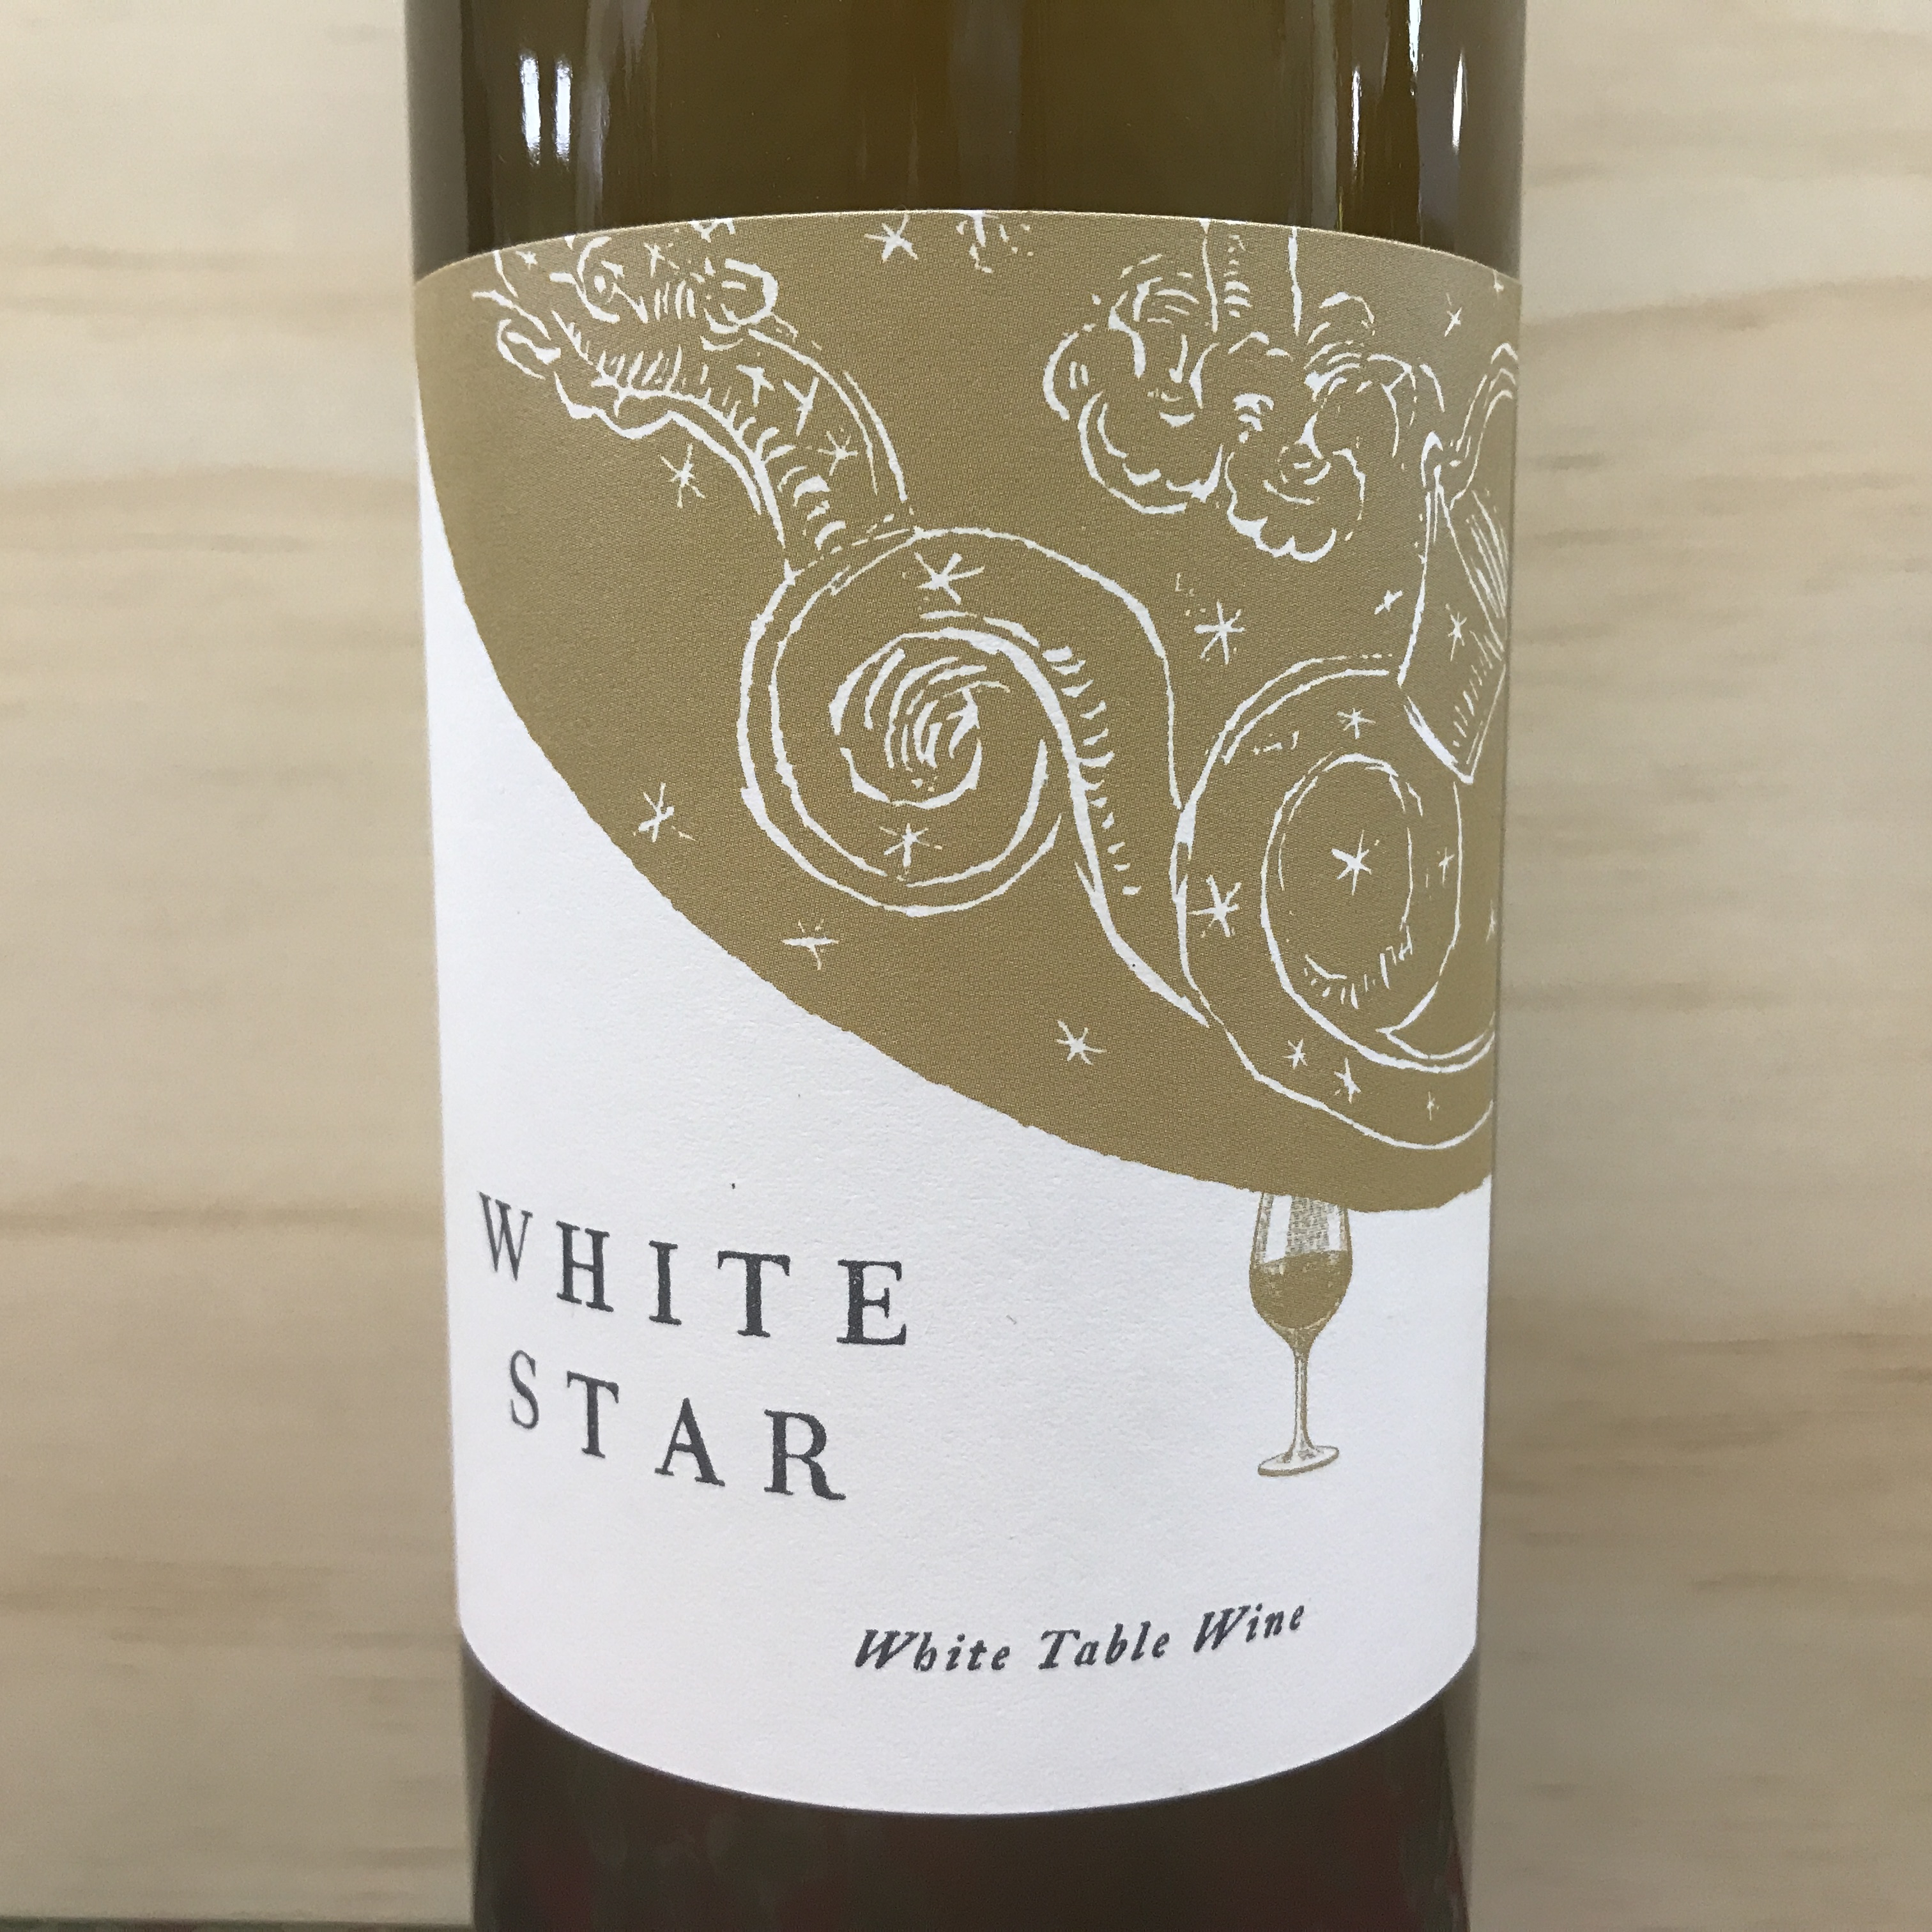 Veritas White Star White wine